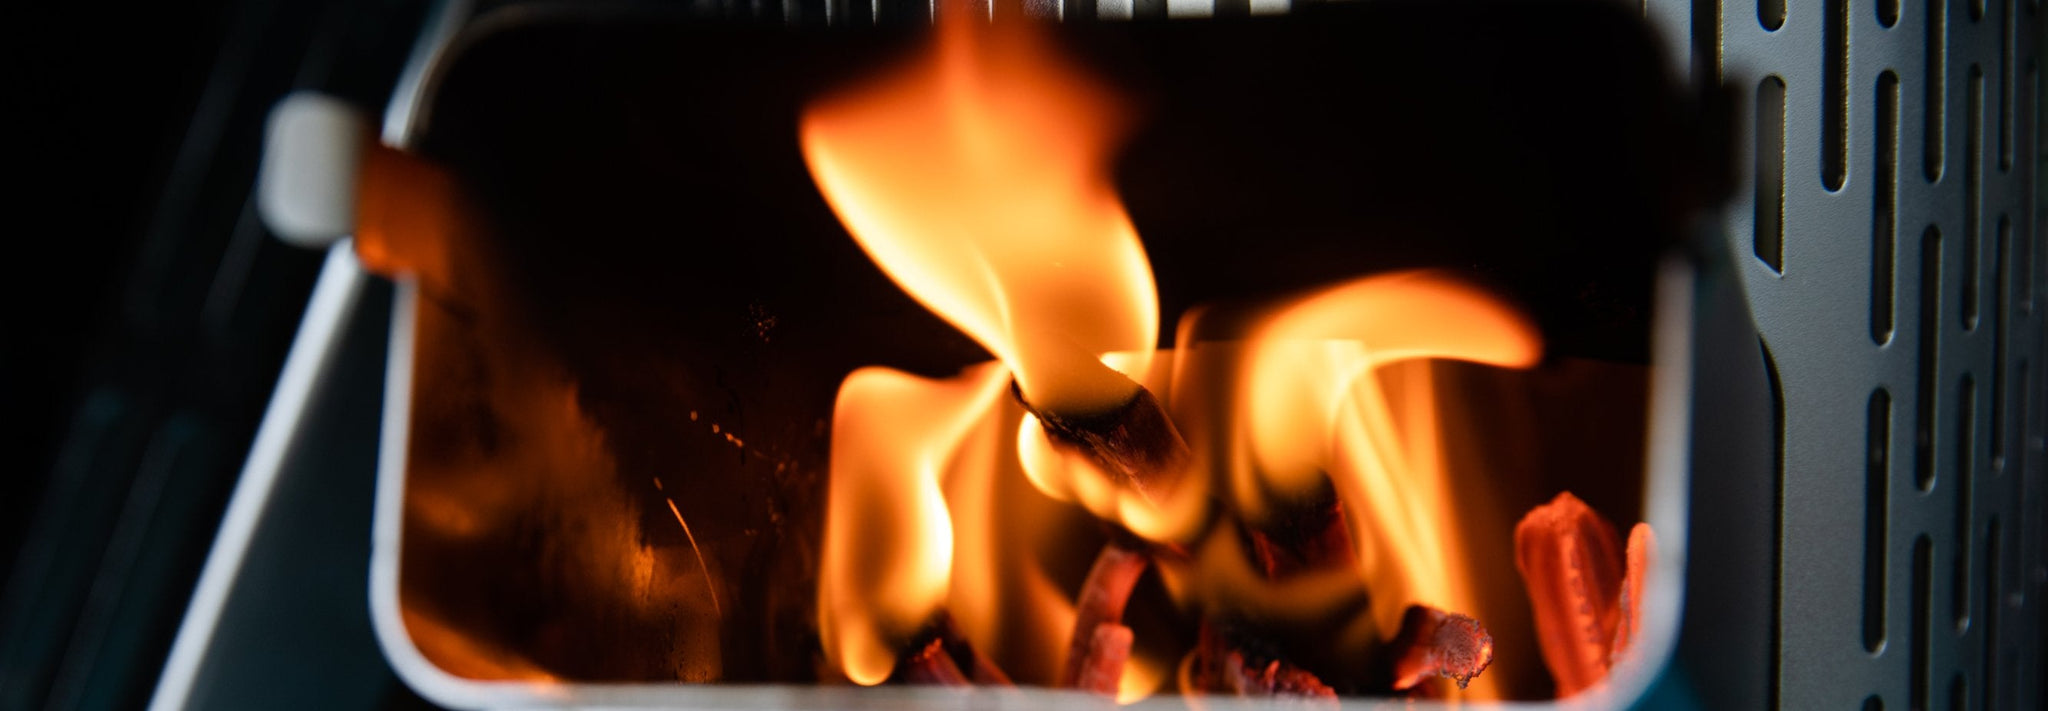 Roccbox wood burner tips - Gozney